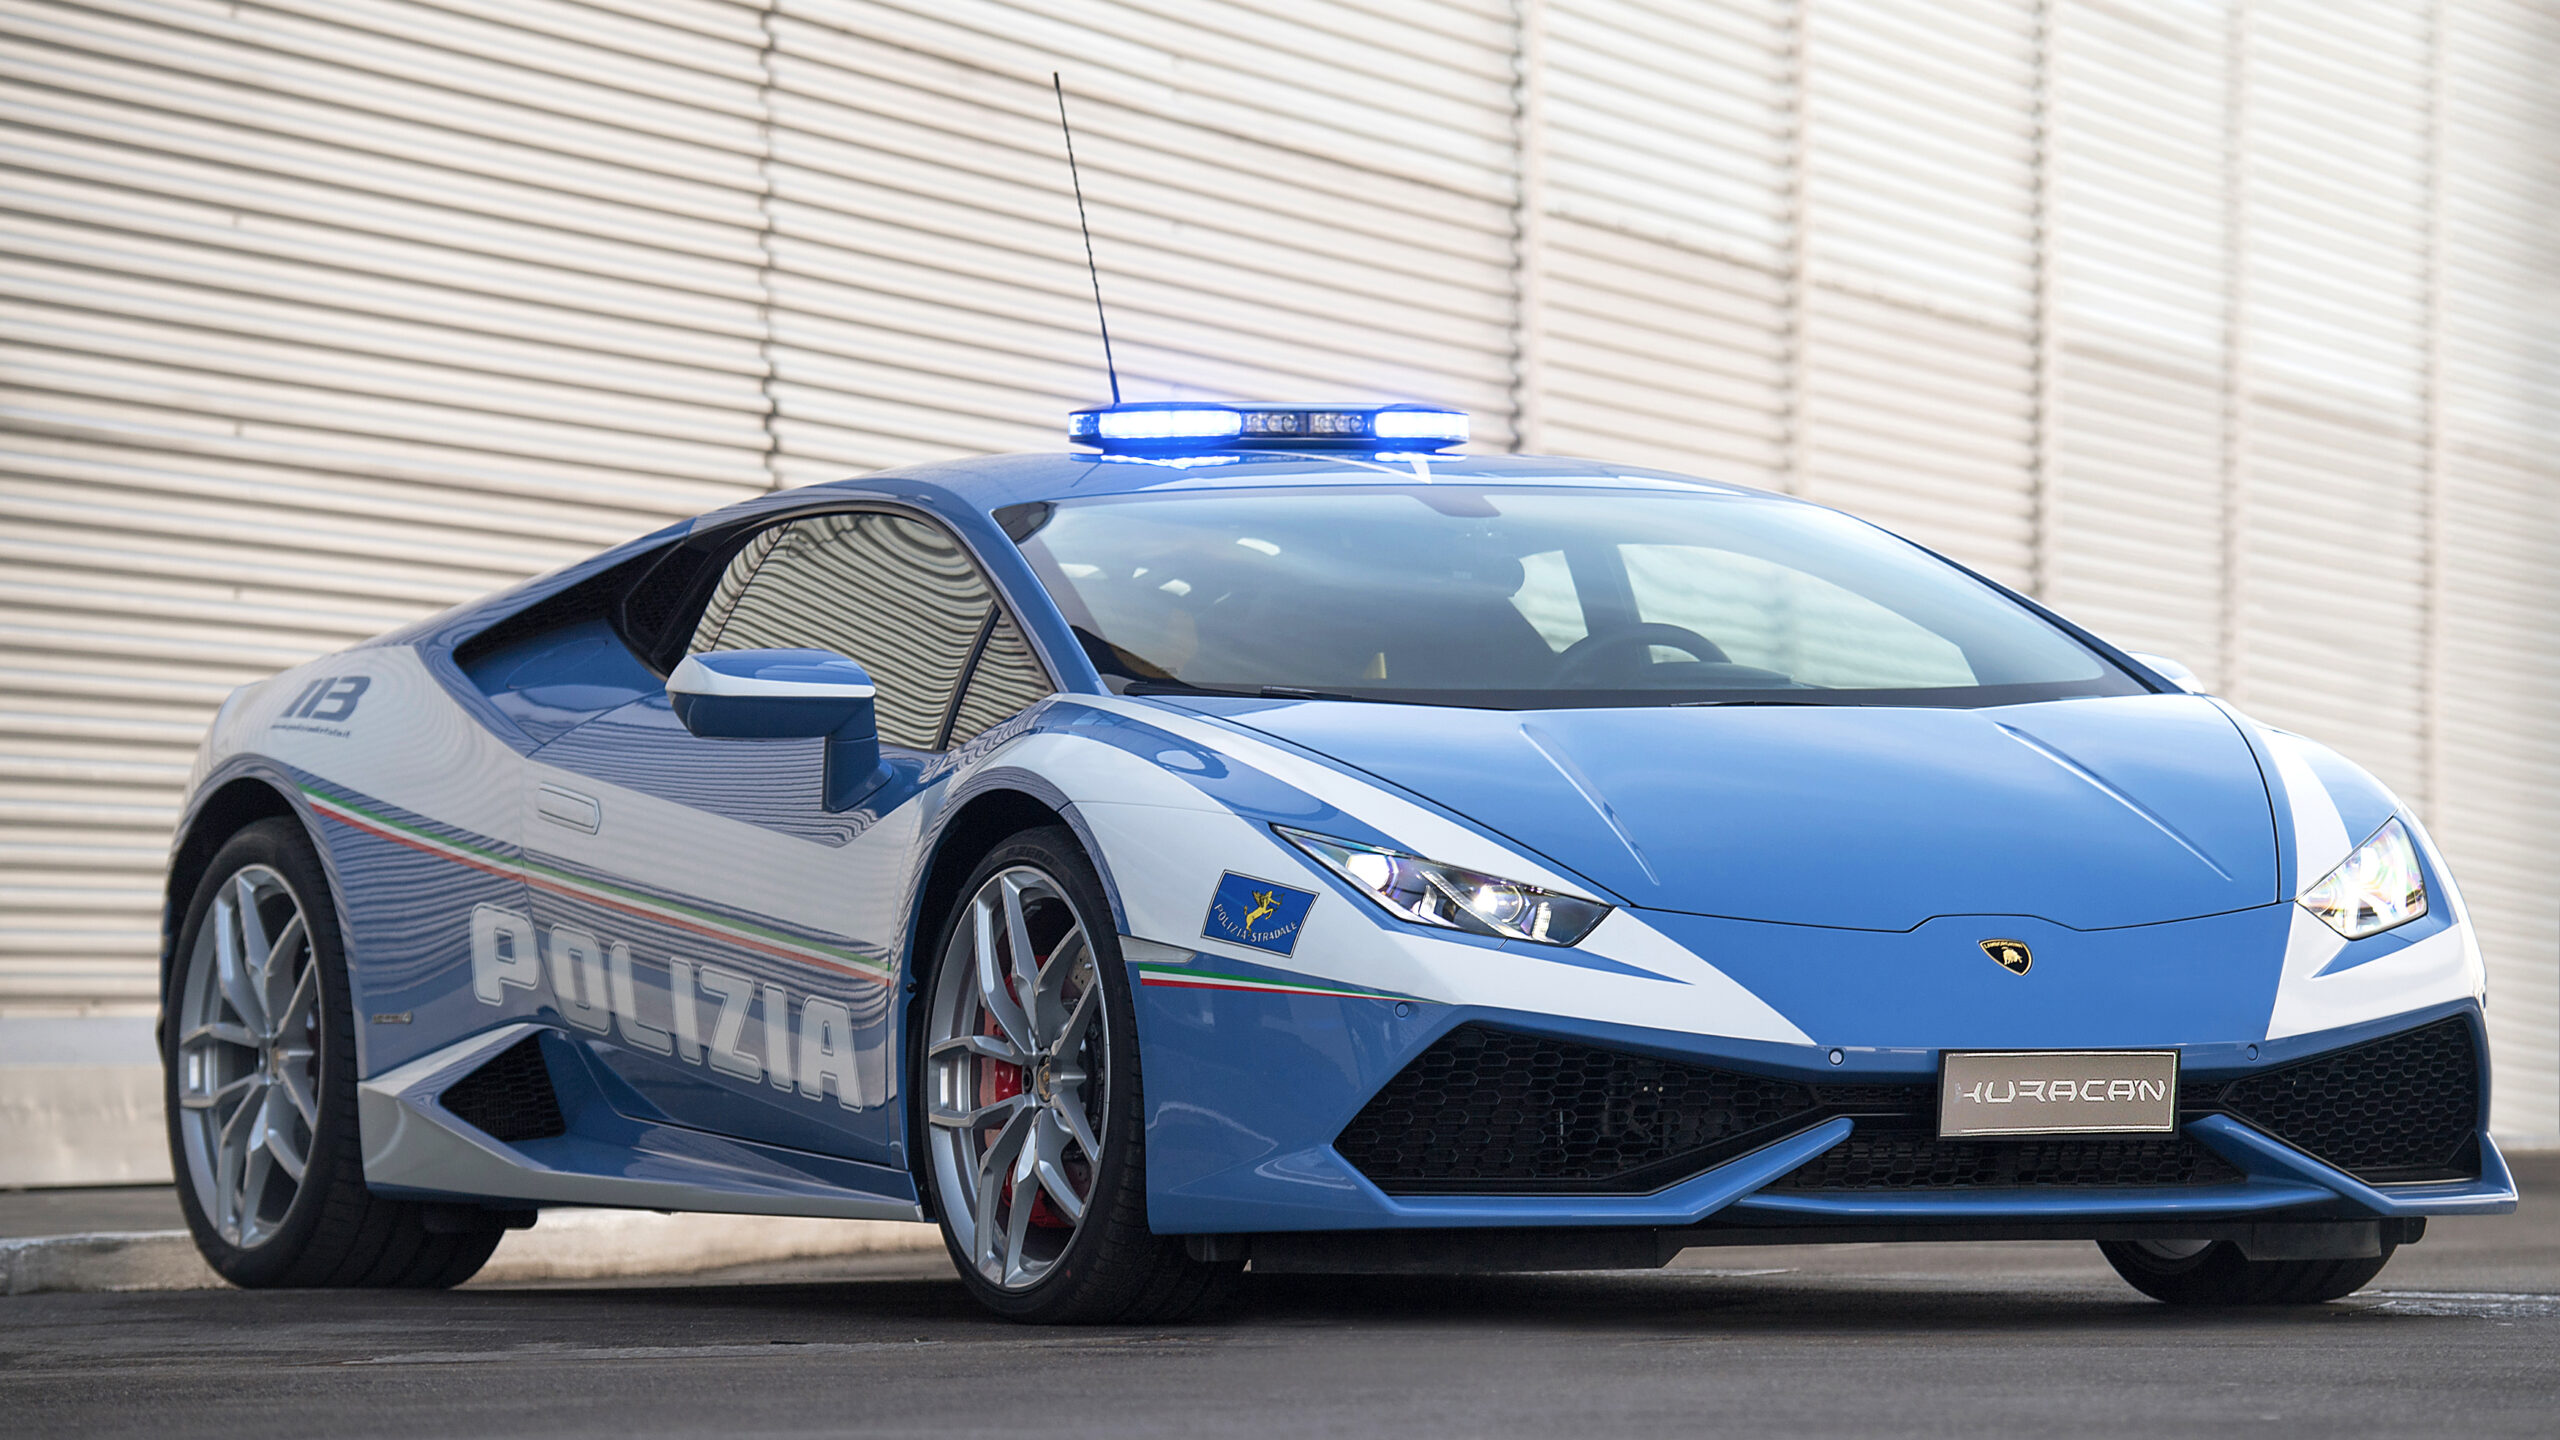 New Car Friday: What Happens When Lamborghini Designs a Police Car